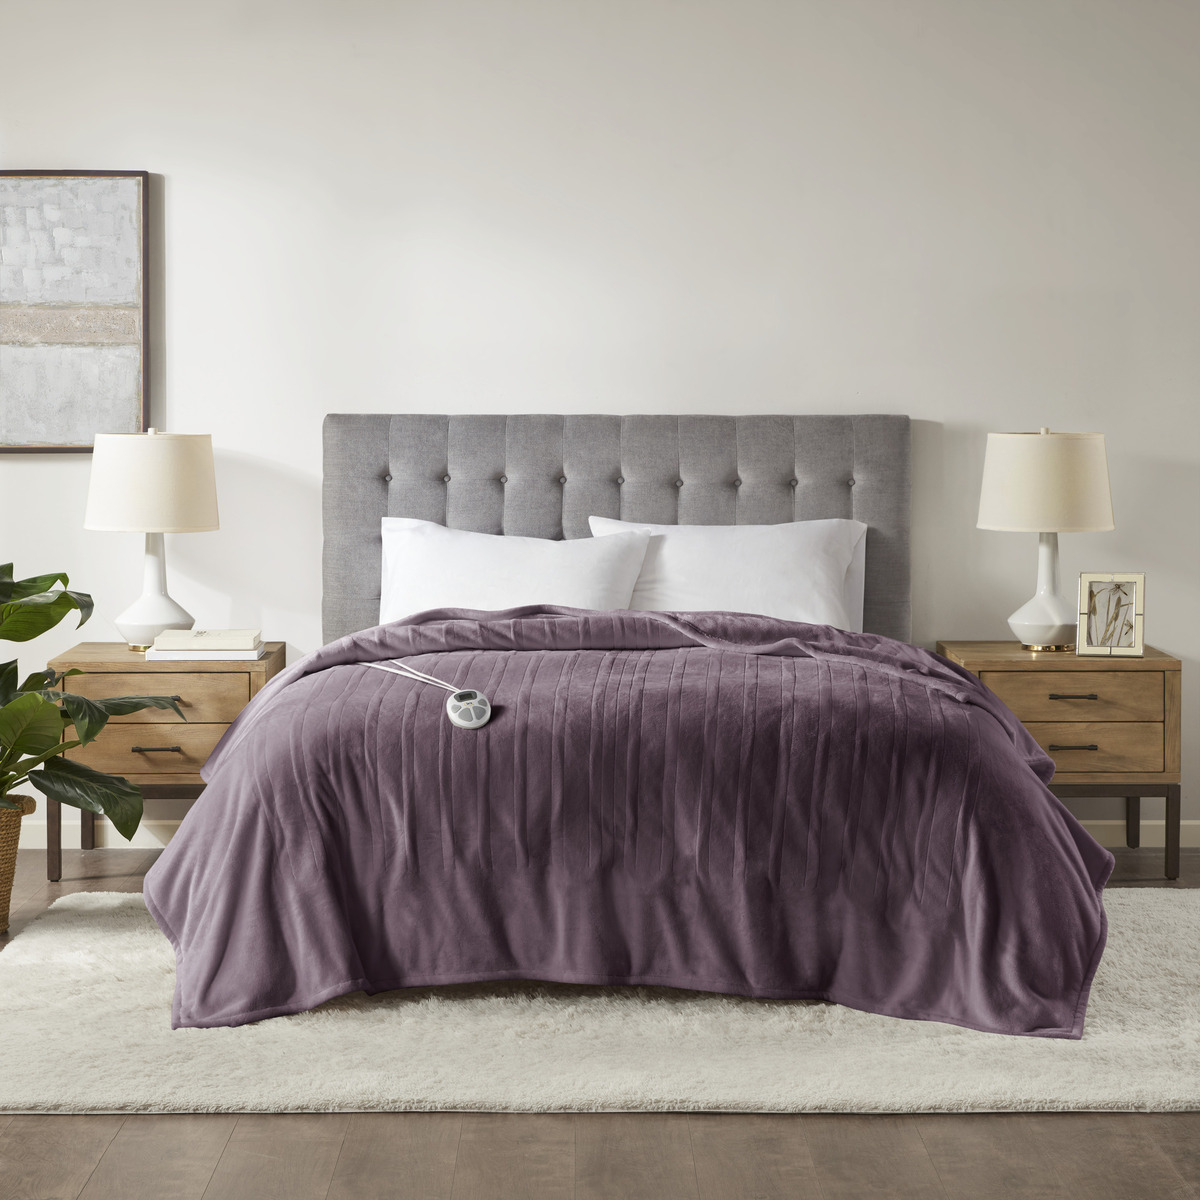 ST54-0092 Purple 100 Percent Polyester Microlight Heated Blanket, Queen Size -  Serta